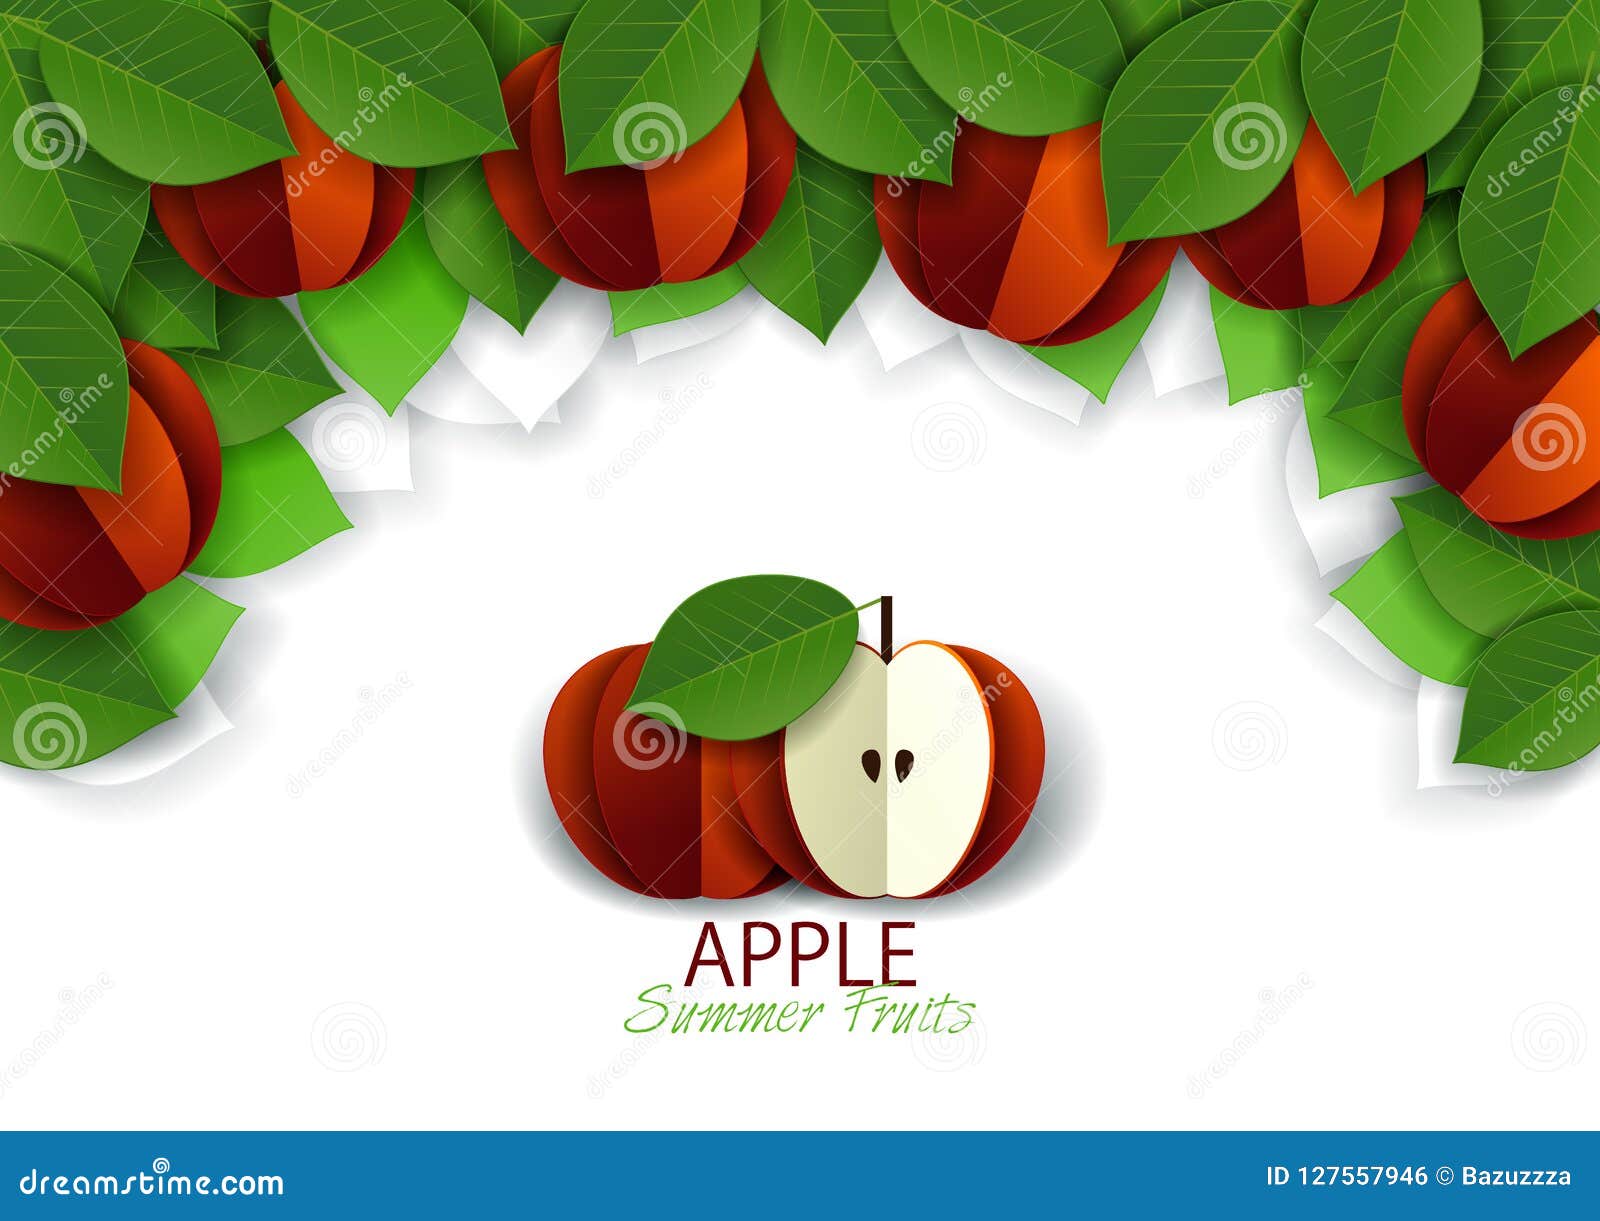 Apple Fruit: Short Essay on Apple Fruit